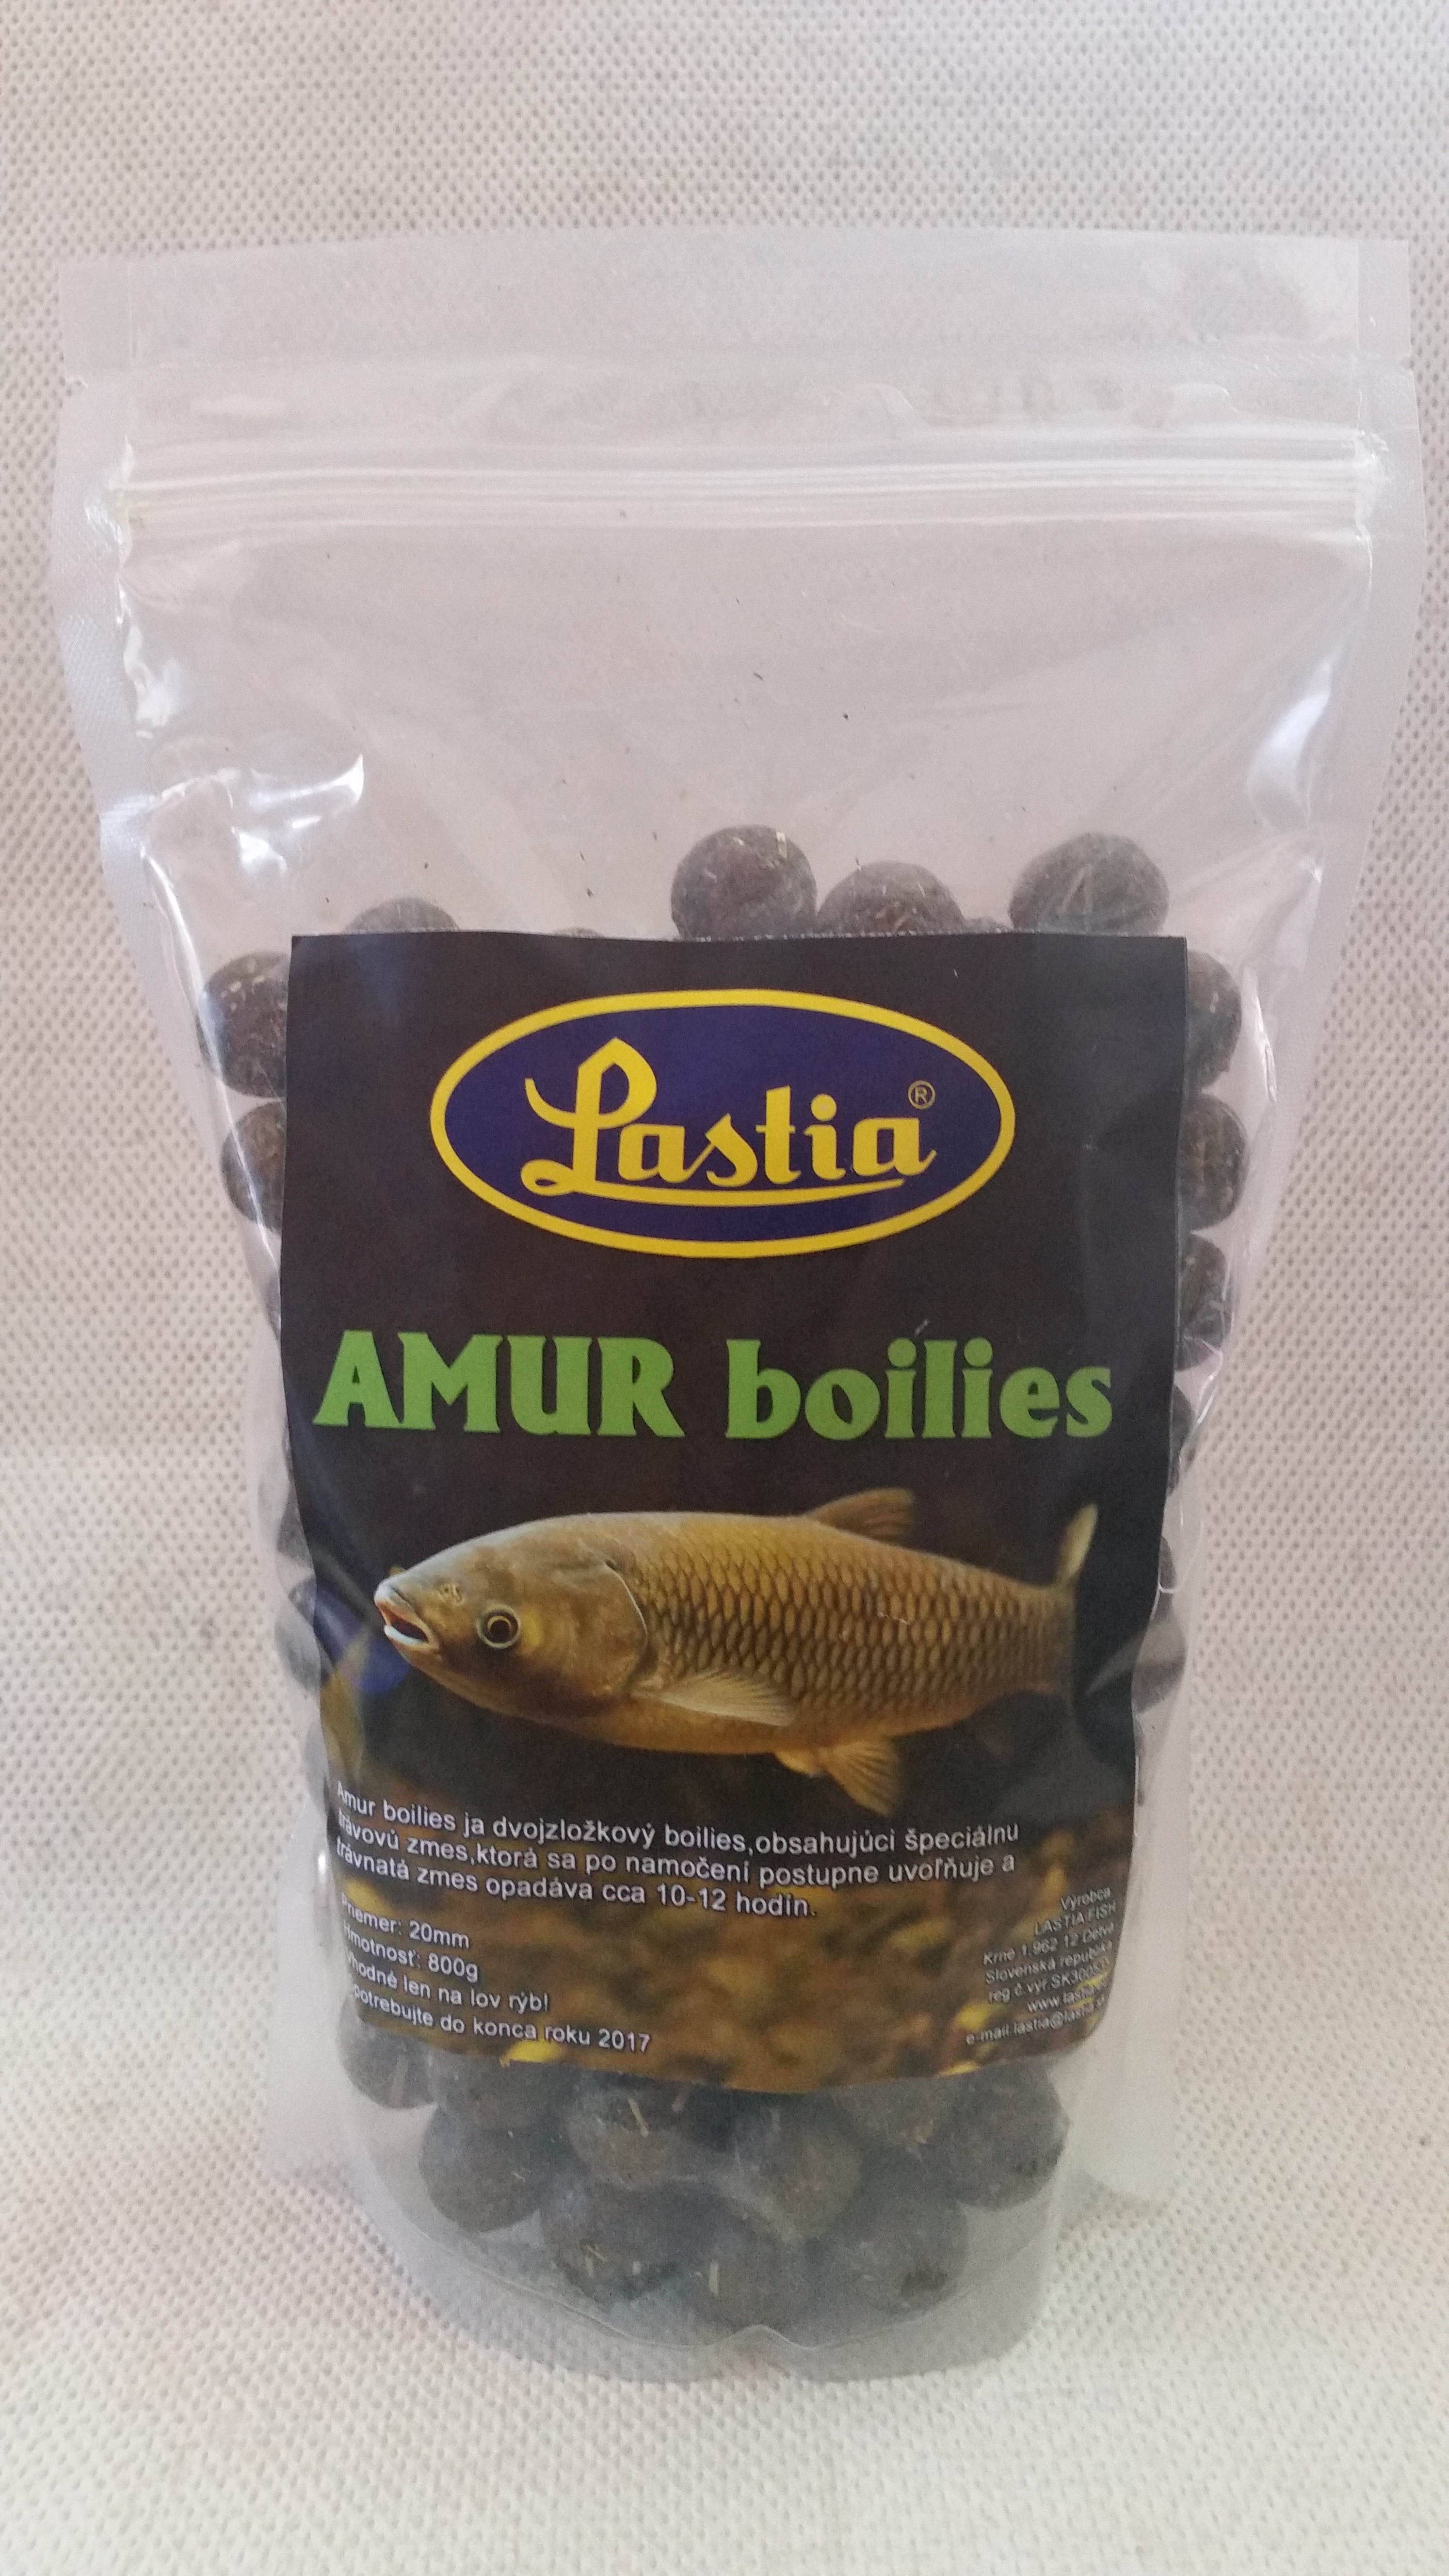 AMUR-boilies-Lastia